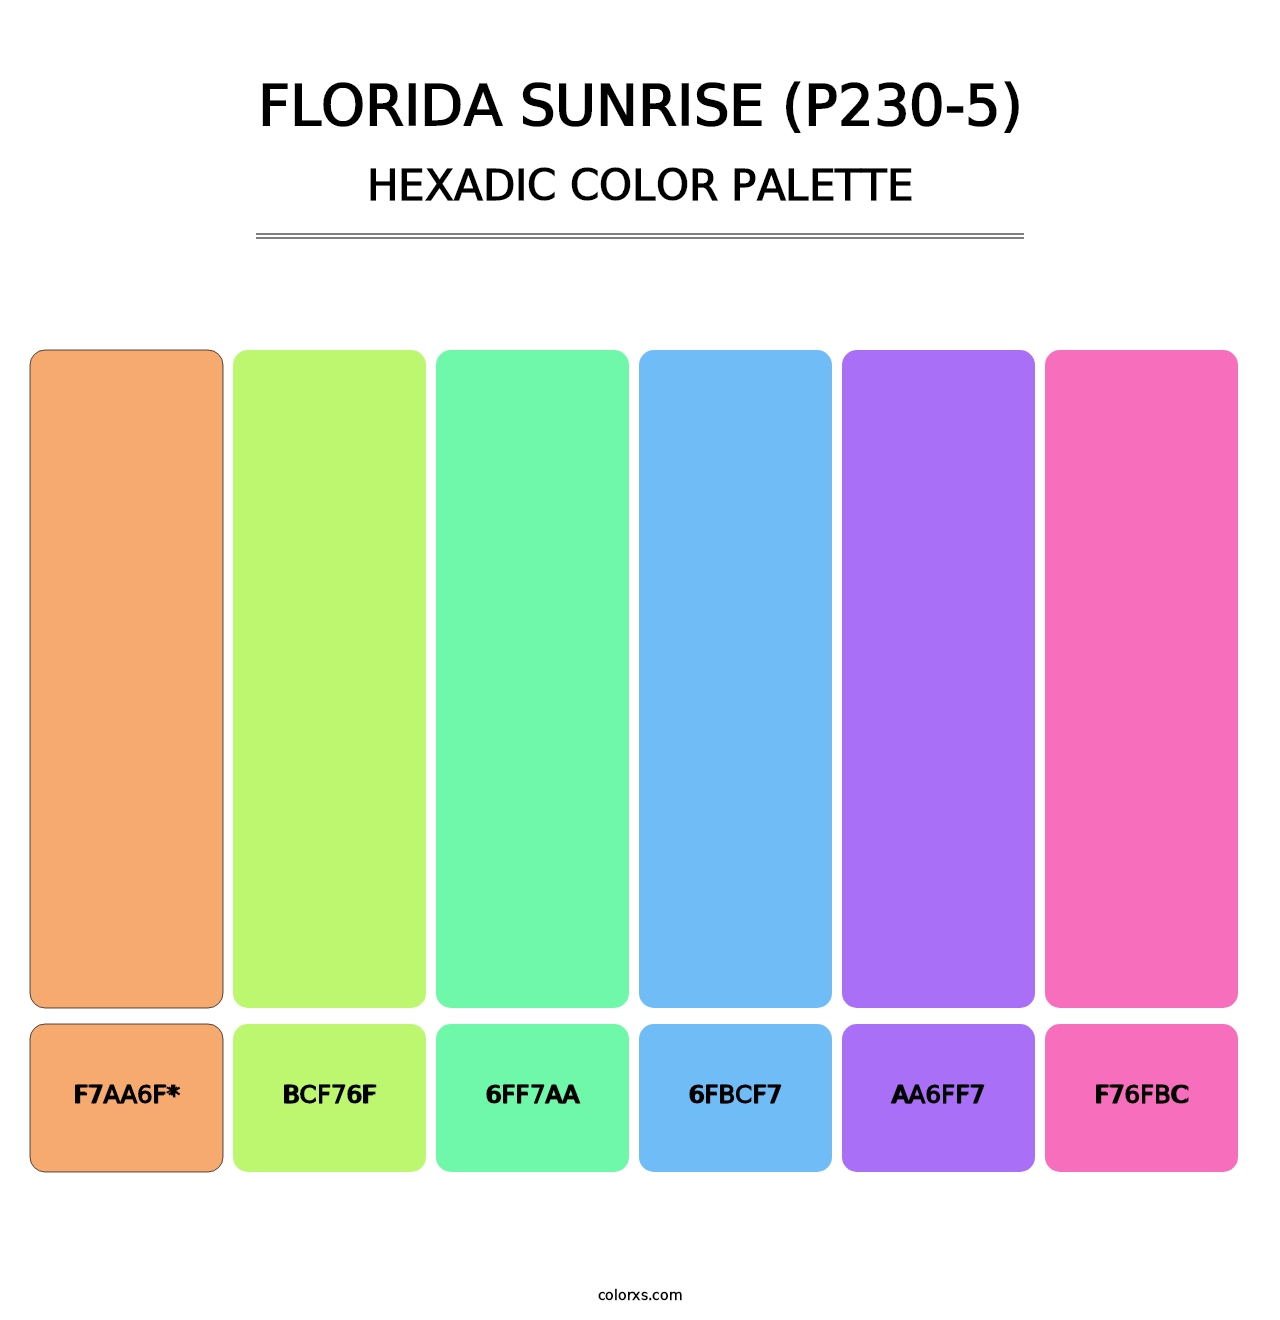 Florida Sunrise (P230-5) - Hexadic Color Palette